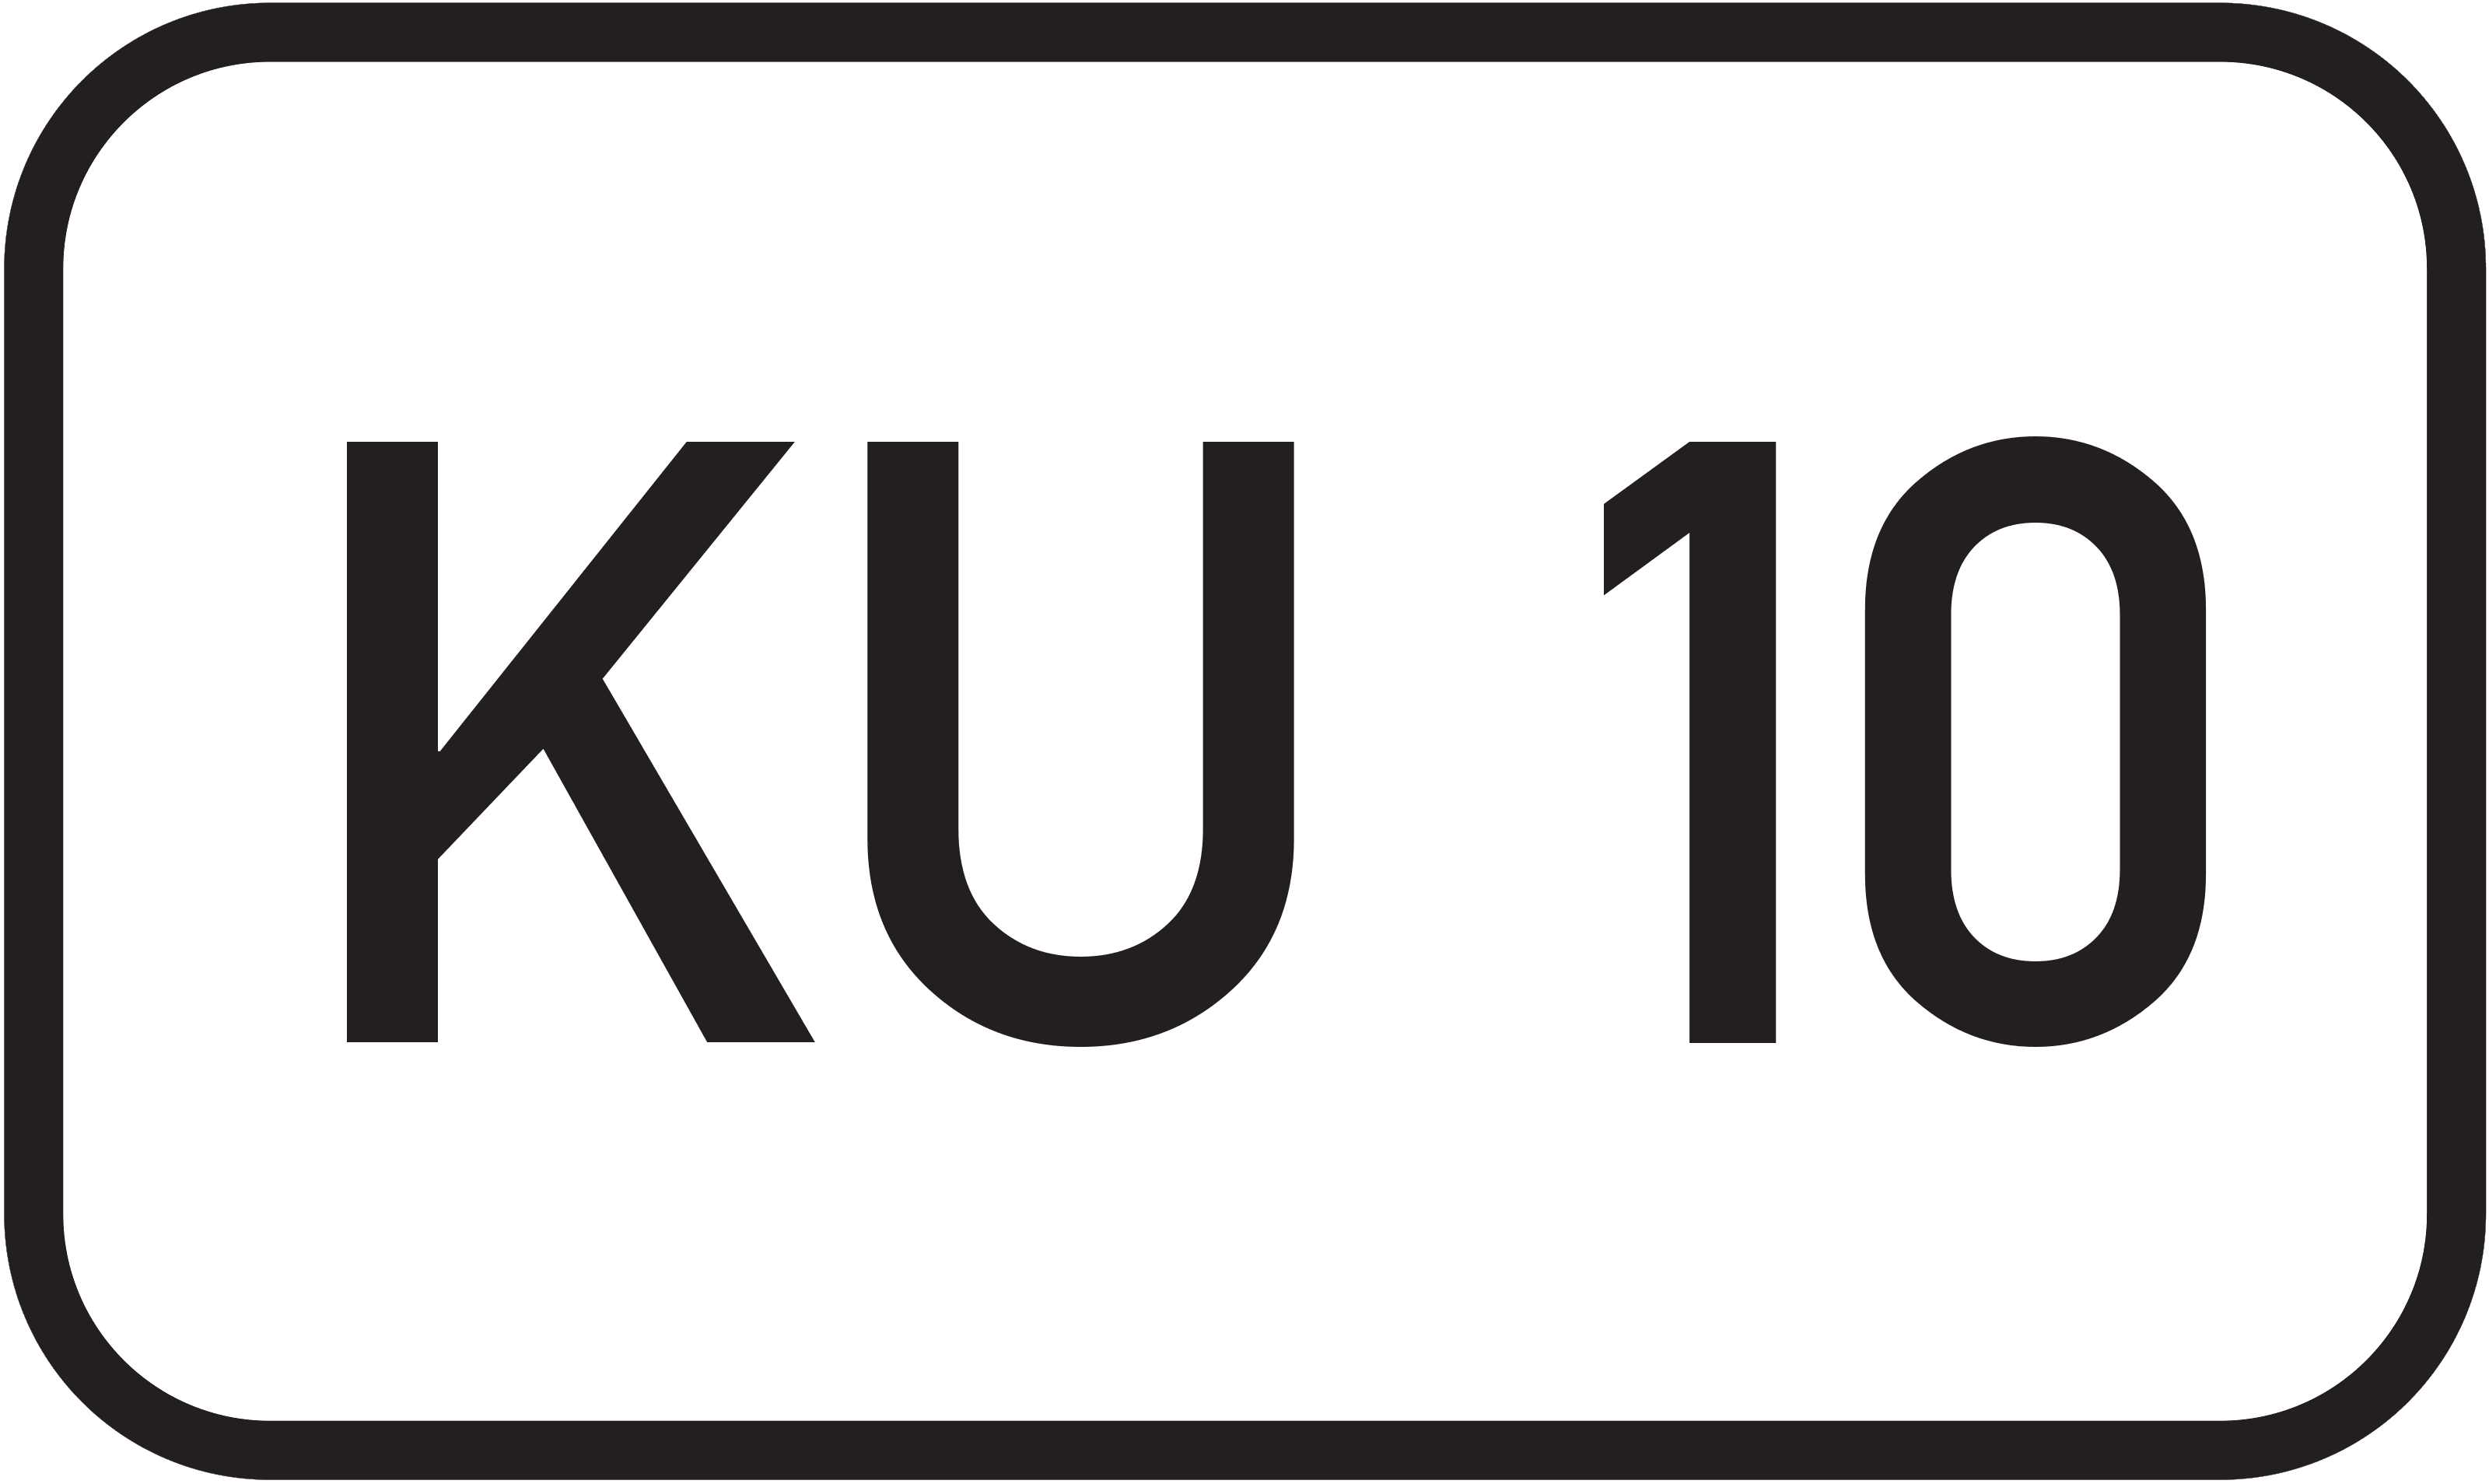 Kreisstraße KU 10